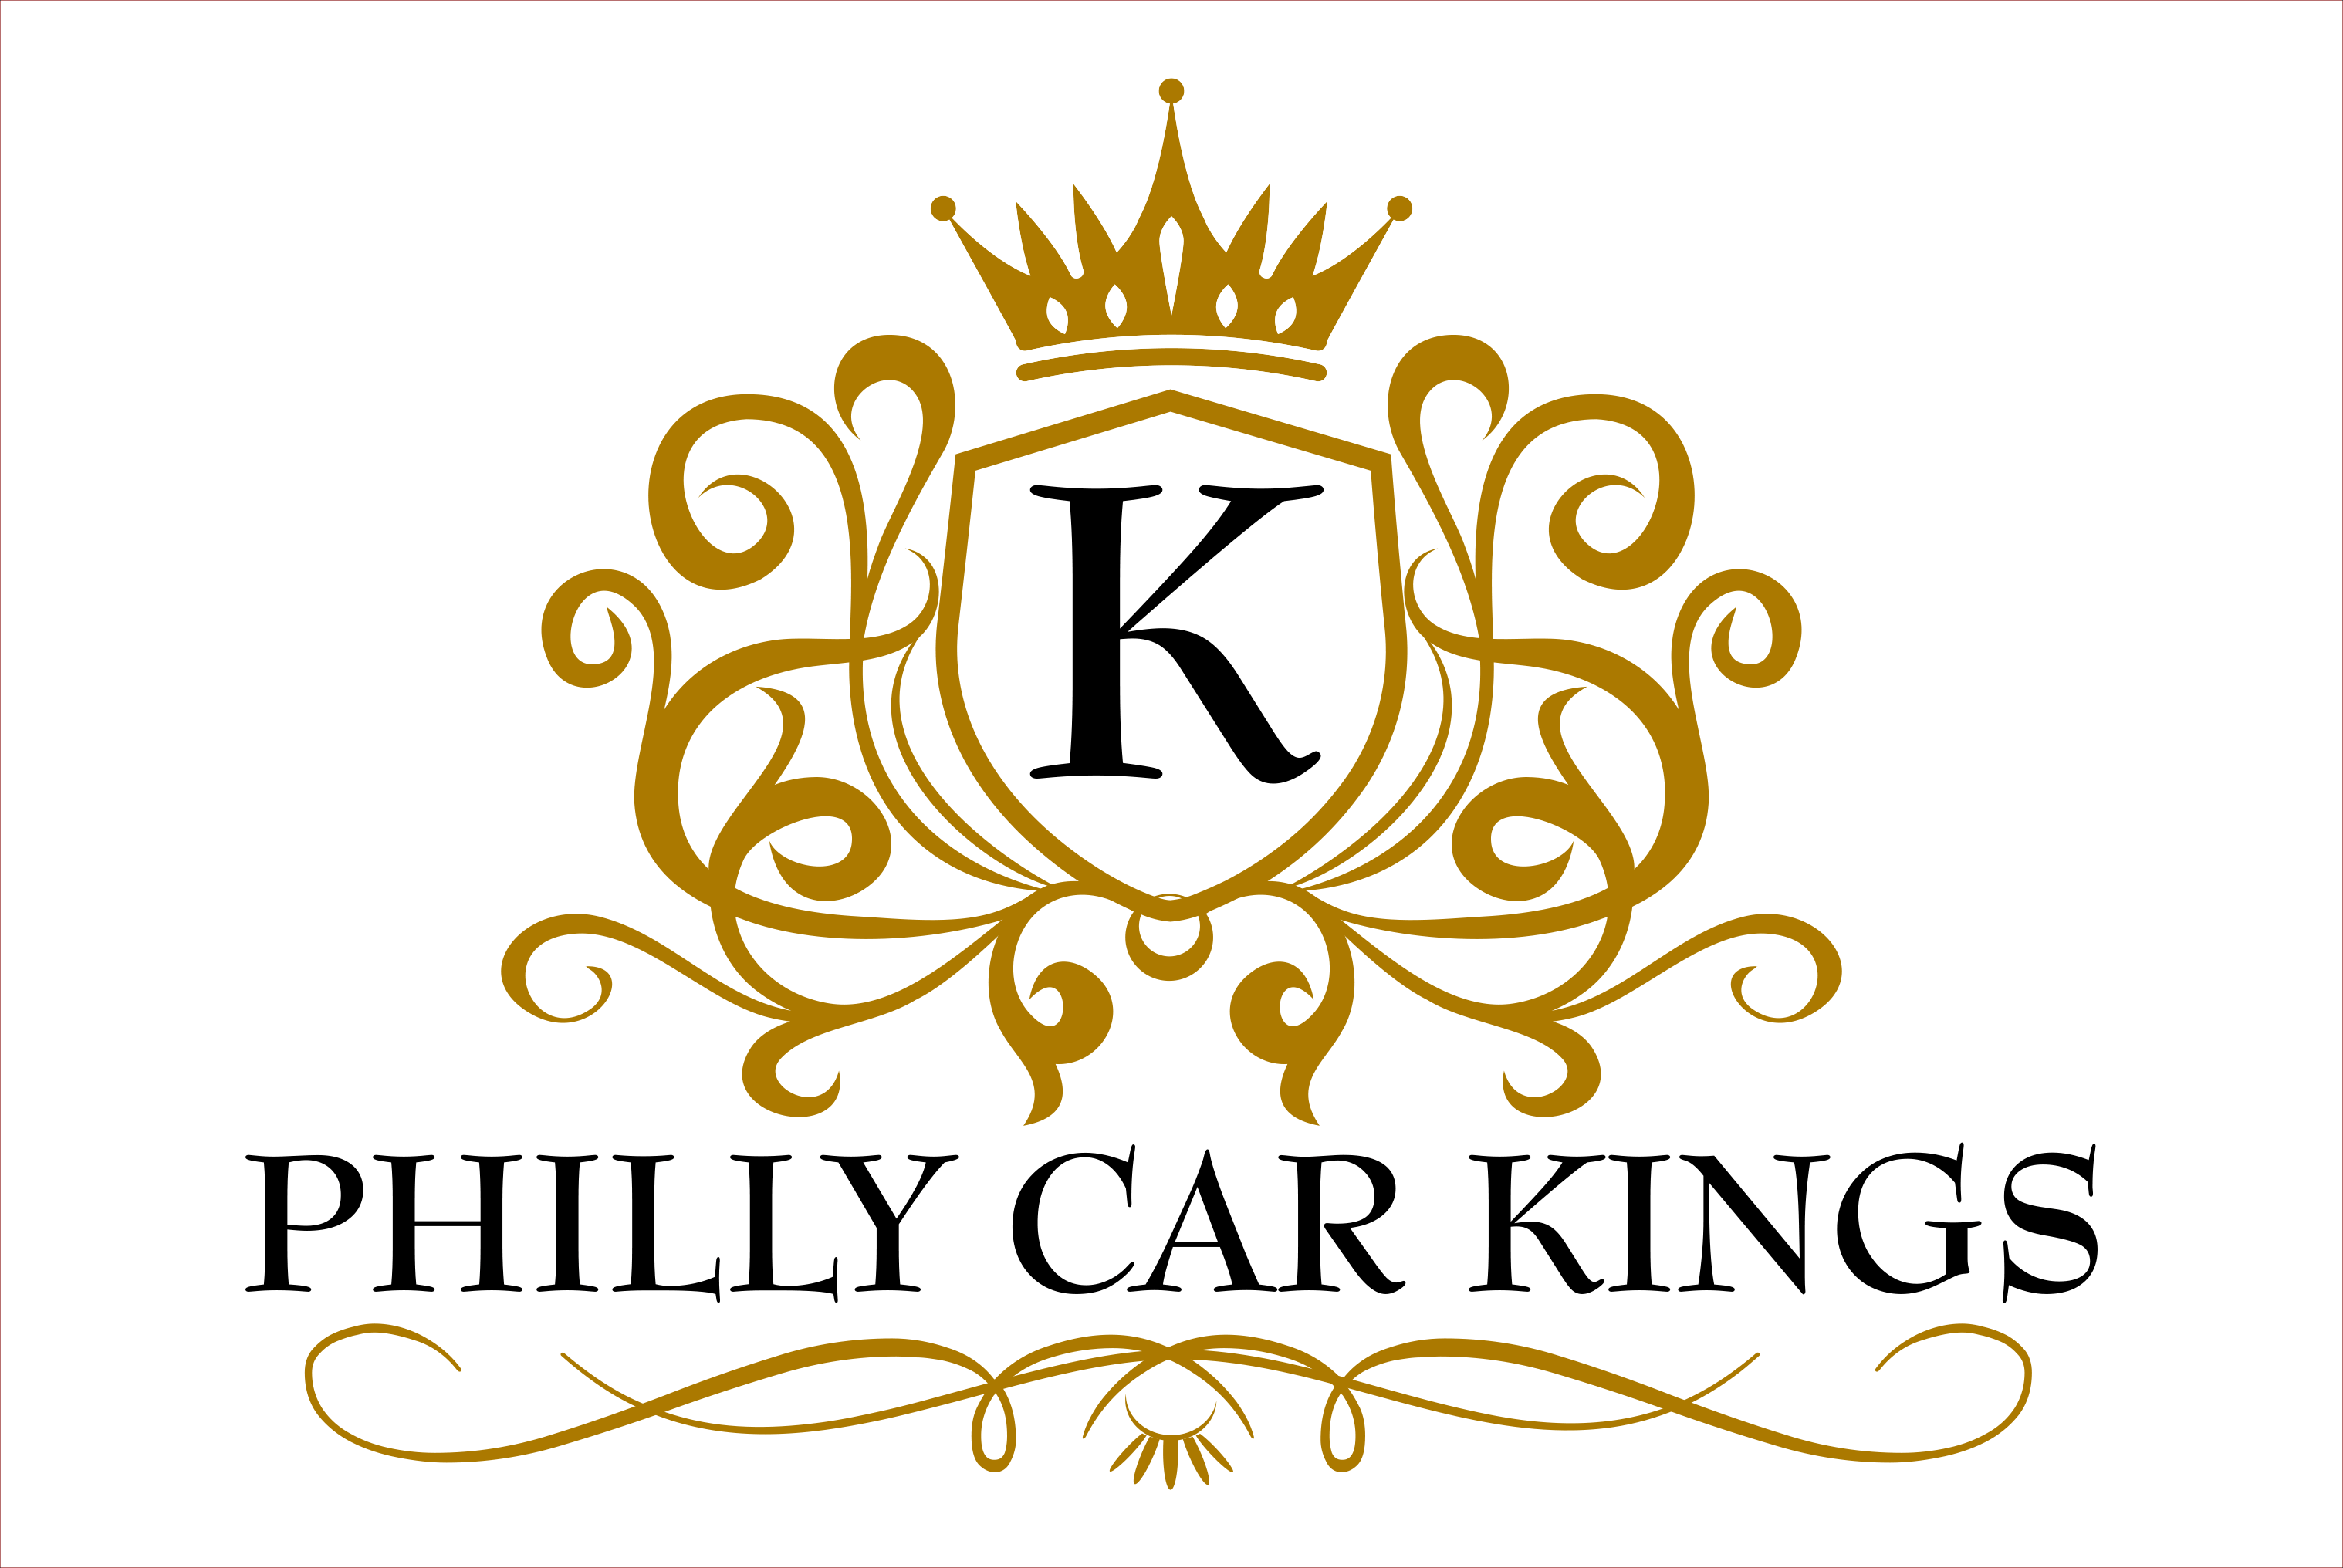 Philly Car Kings Inc